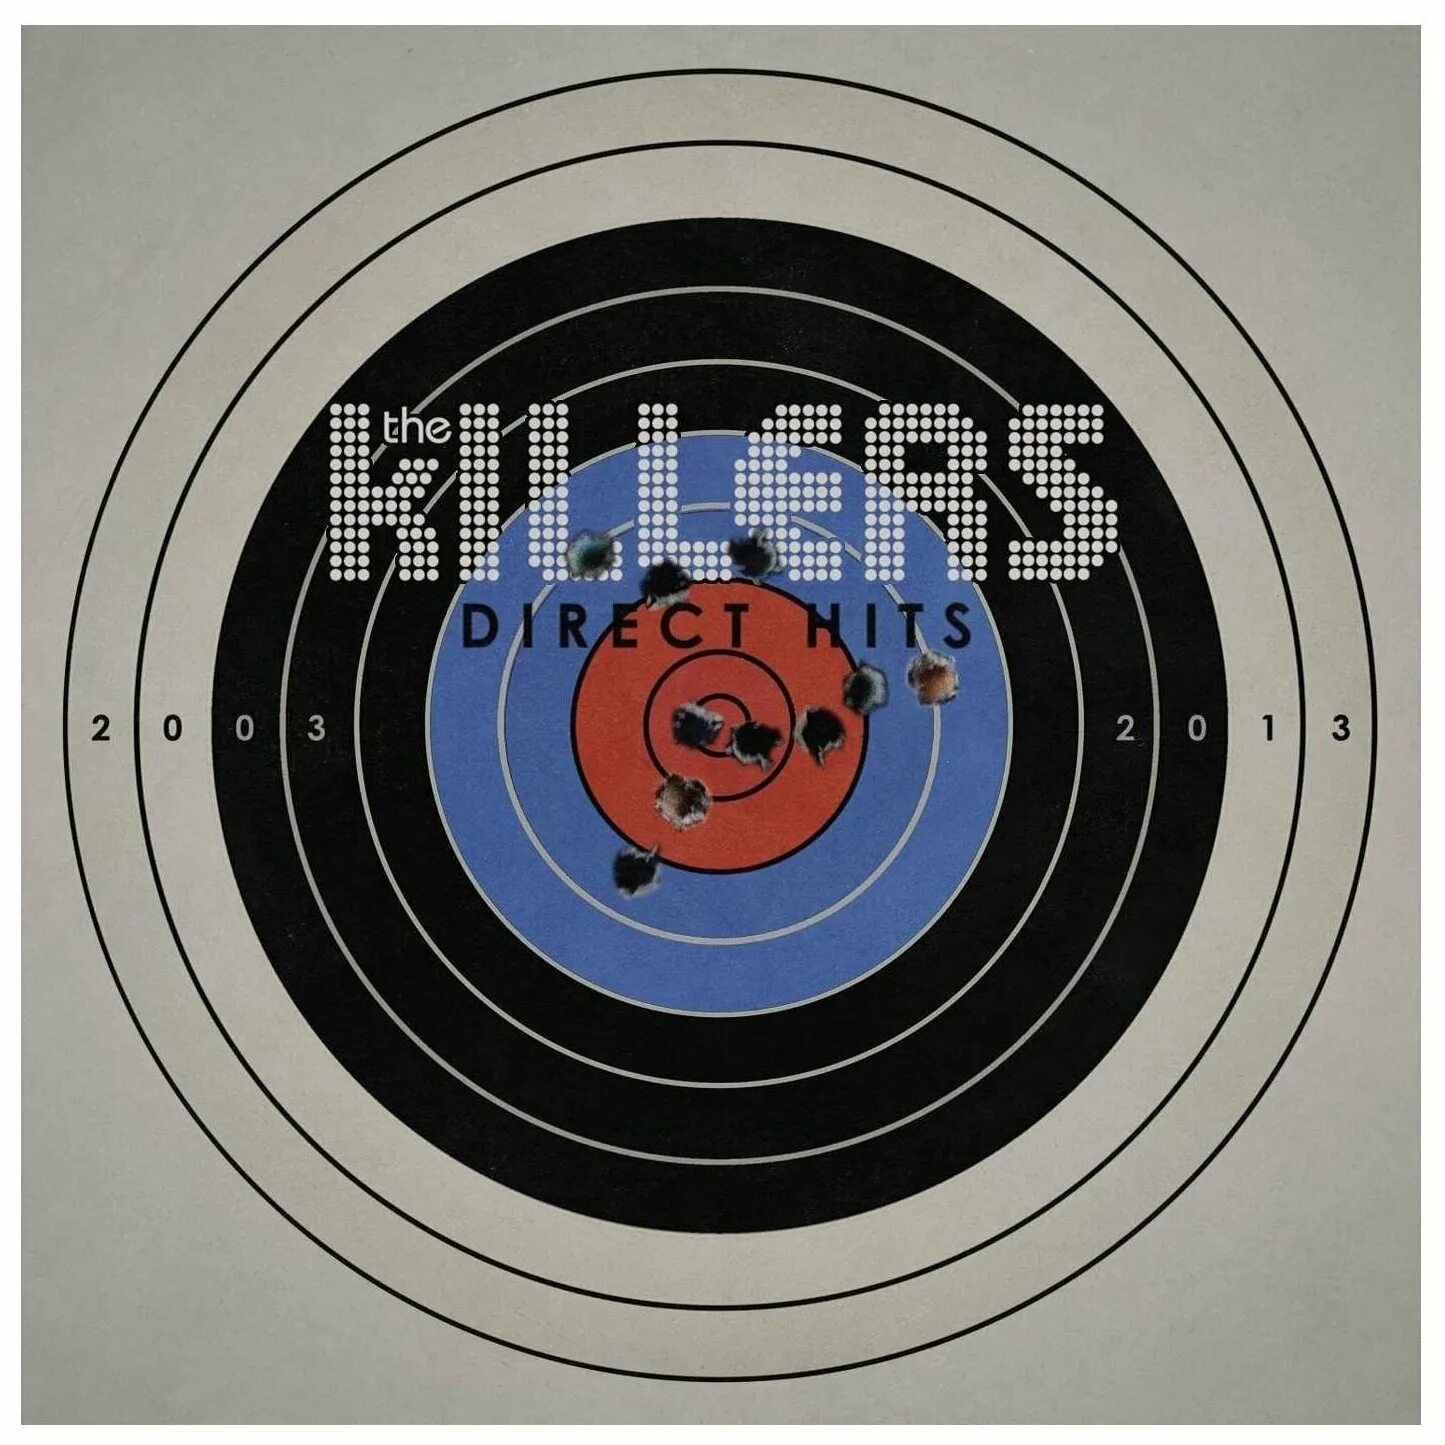 Killers обложка. The Killers direct Hits. The Killers альбомы. The Killers обложки альбомов. The Killers – direct Hits Vinyl.